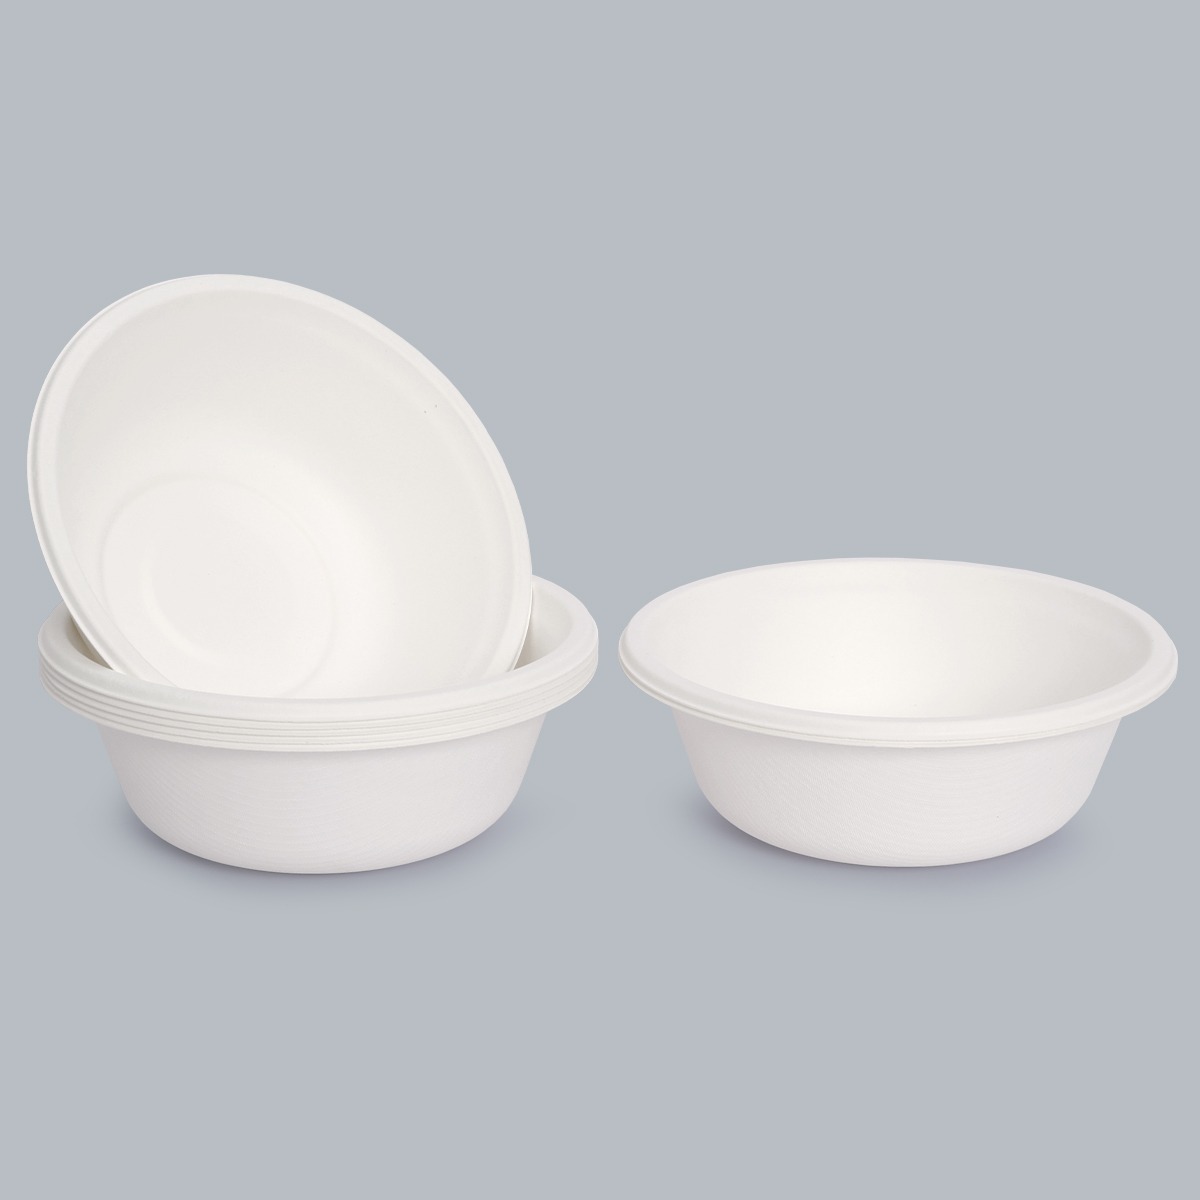 500ml Party bowls Antibacterial bowls environmentally friendly tableware